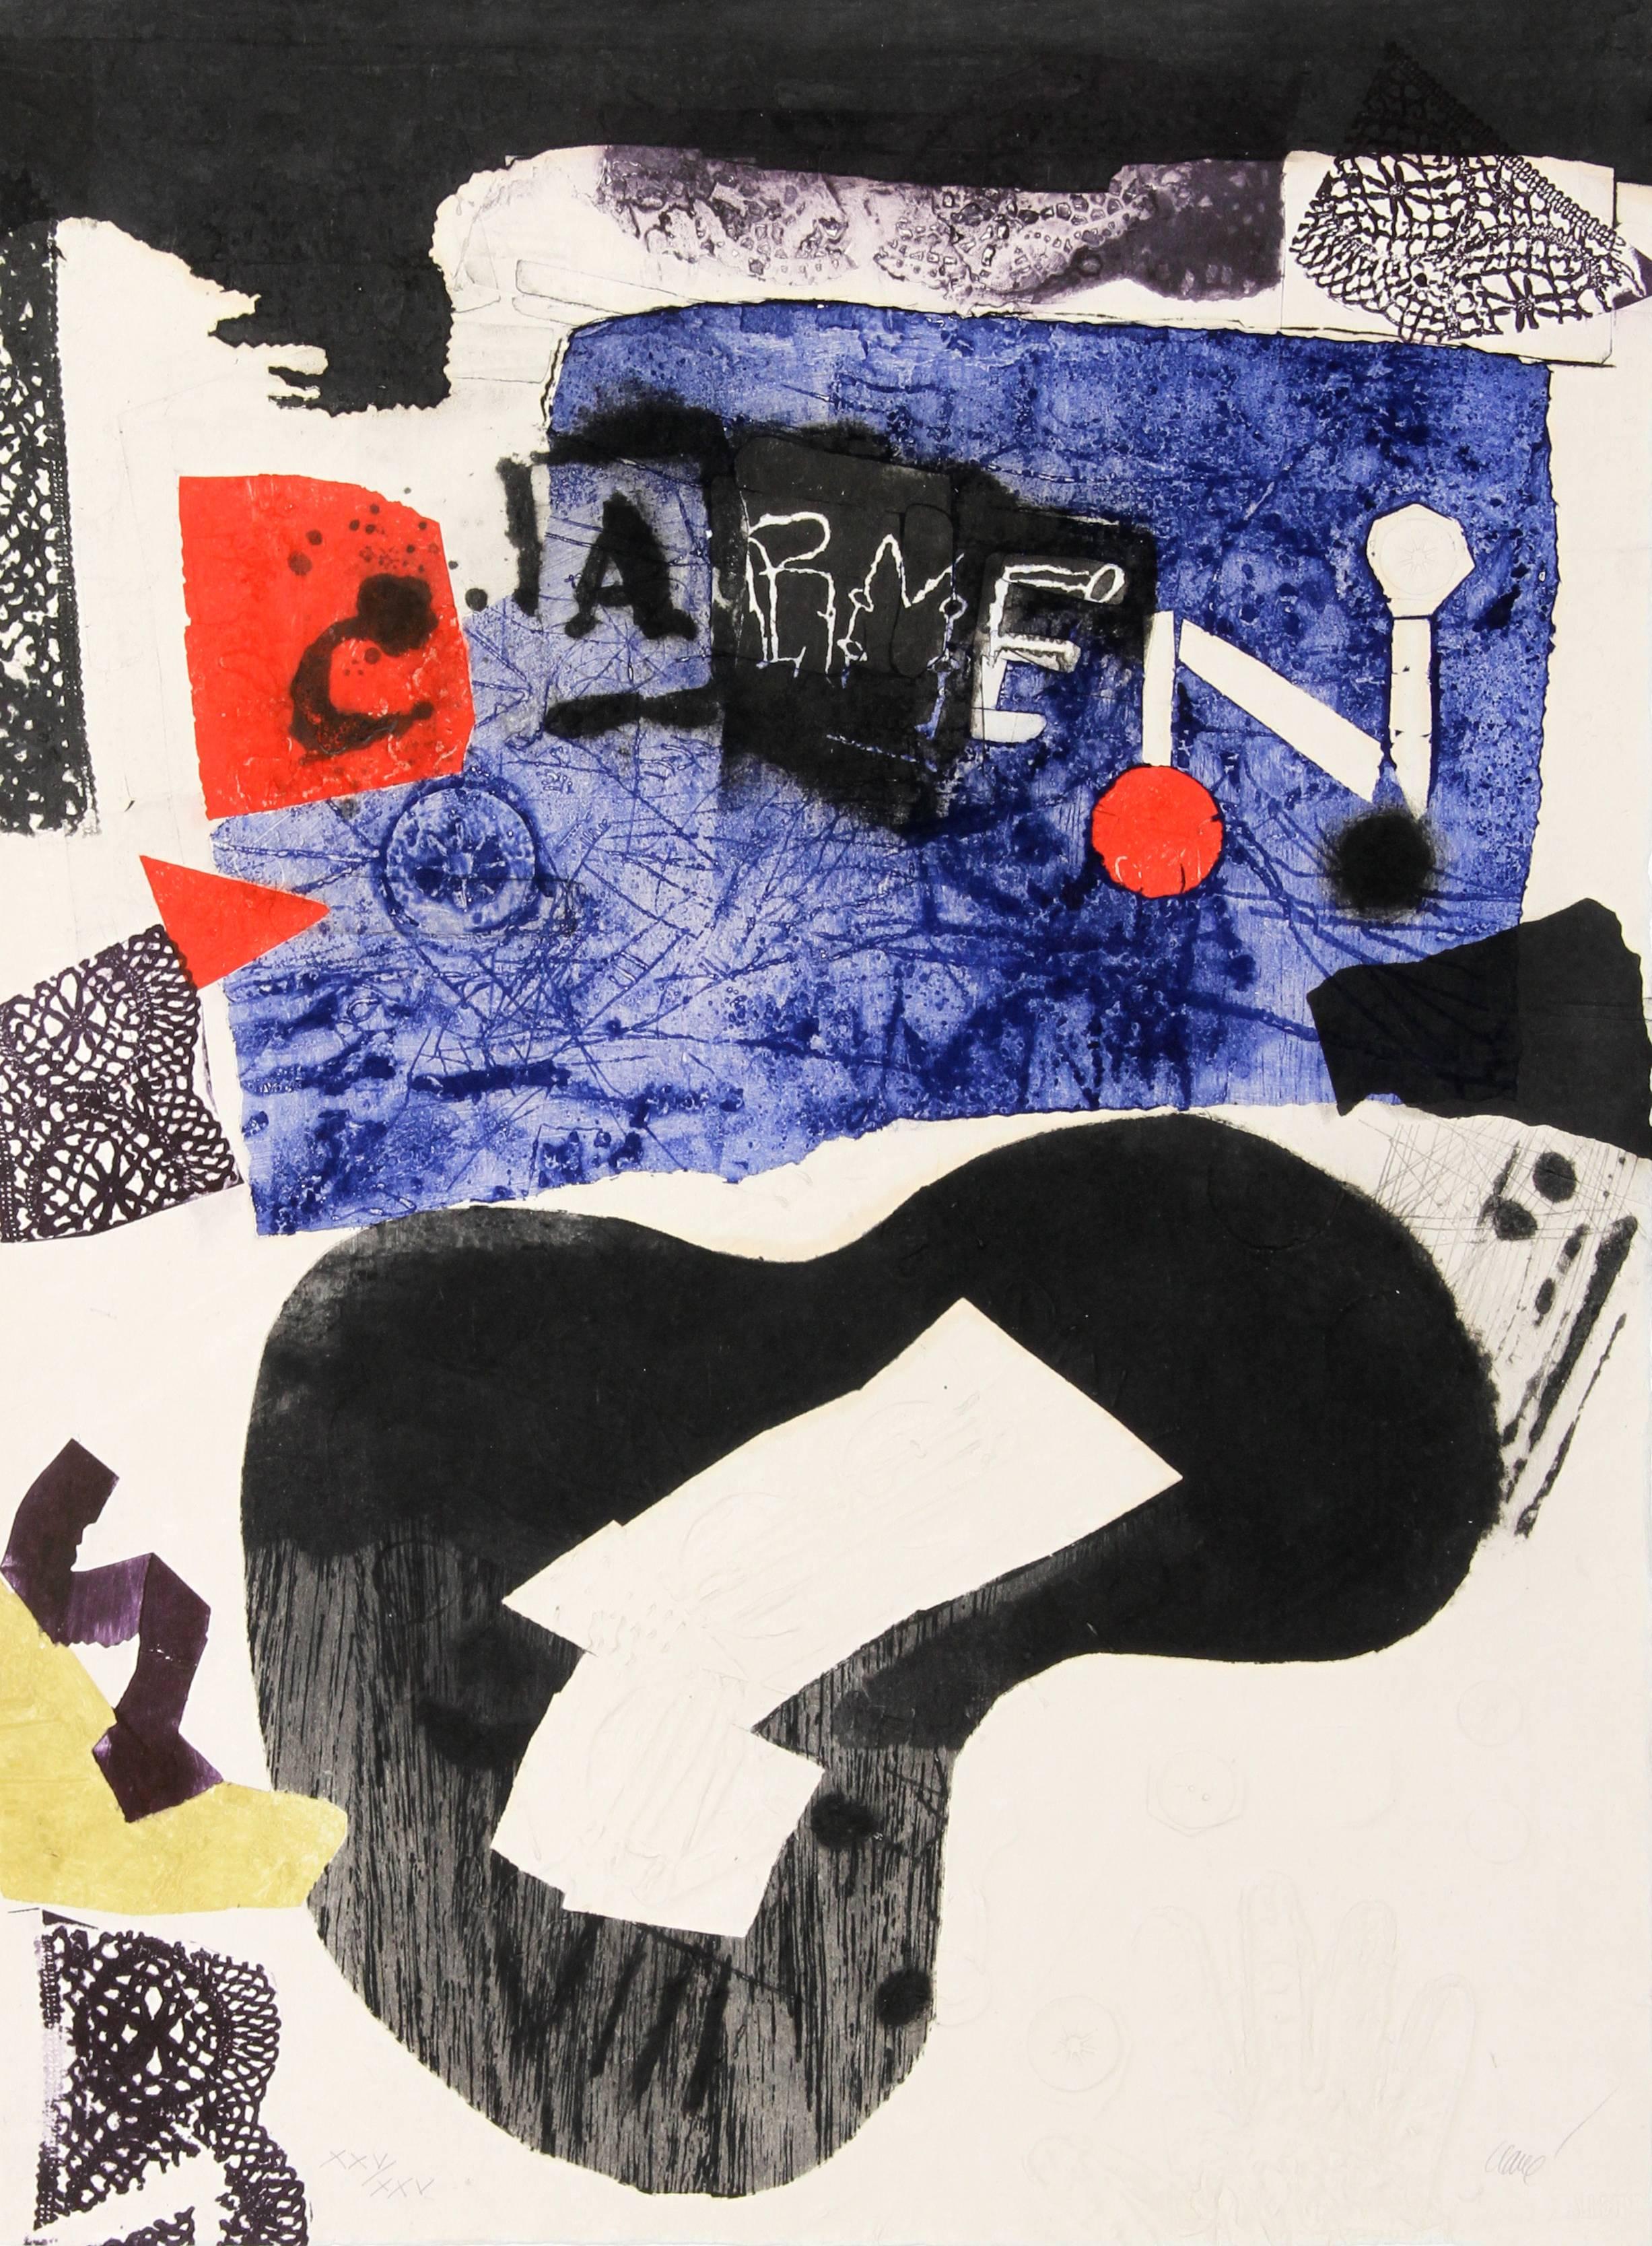 Carmen, Aquatint Etching by Antoni Clave